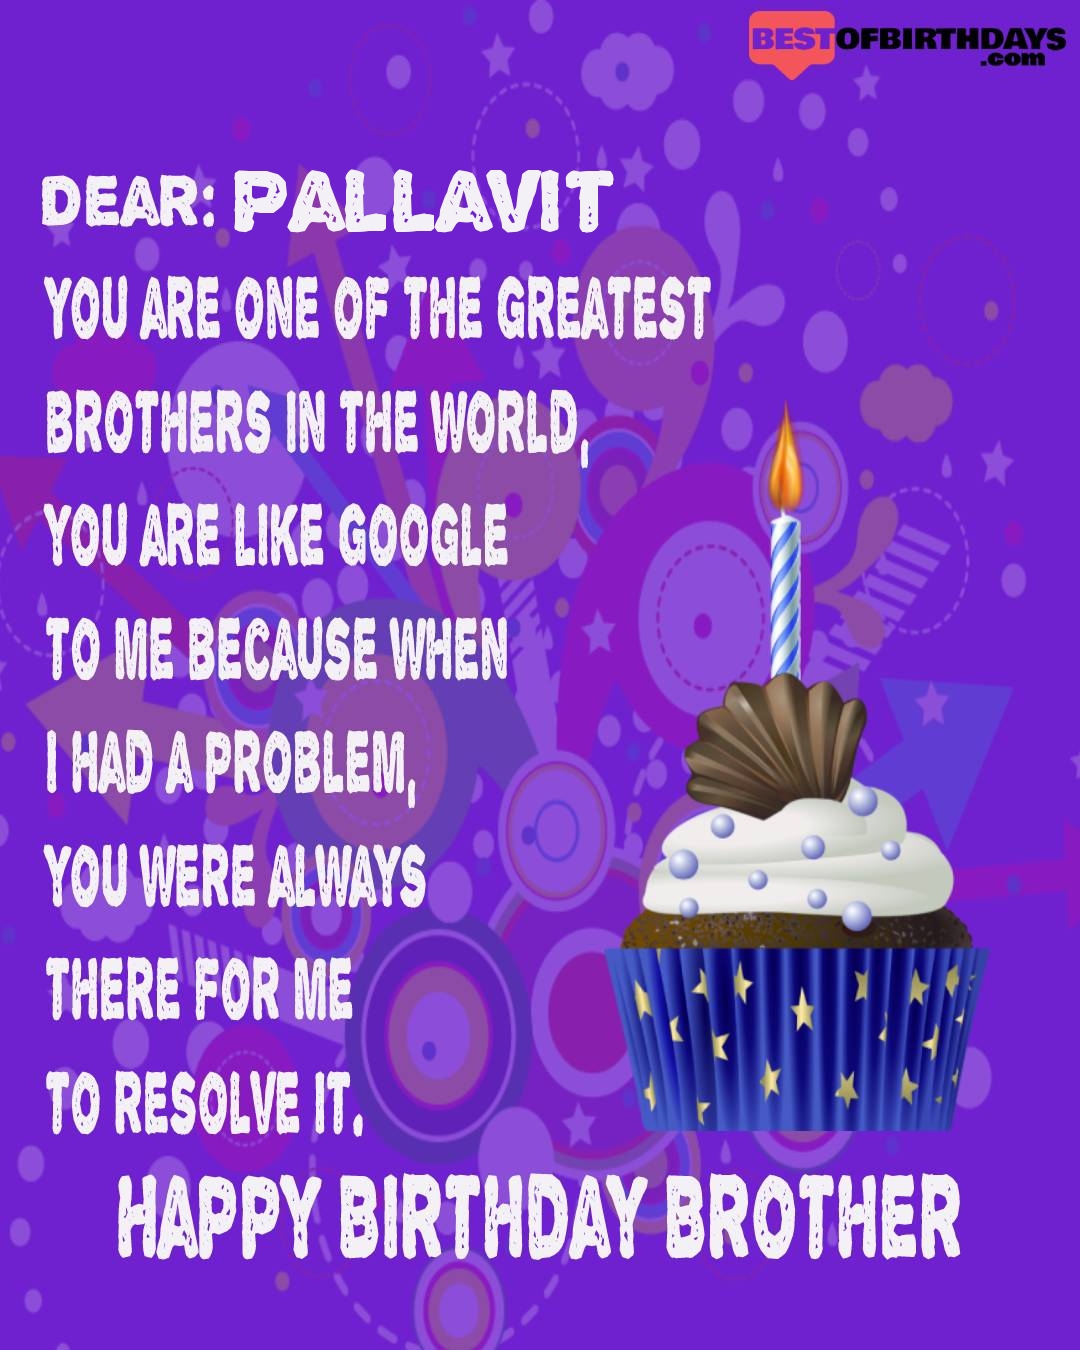 Happy birthday pallavit bhai brother bro